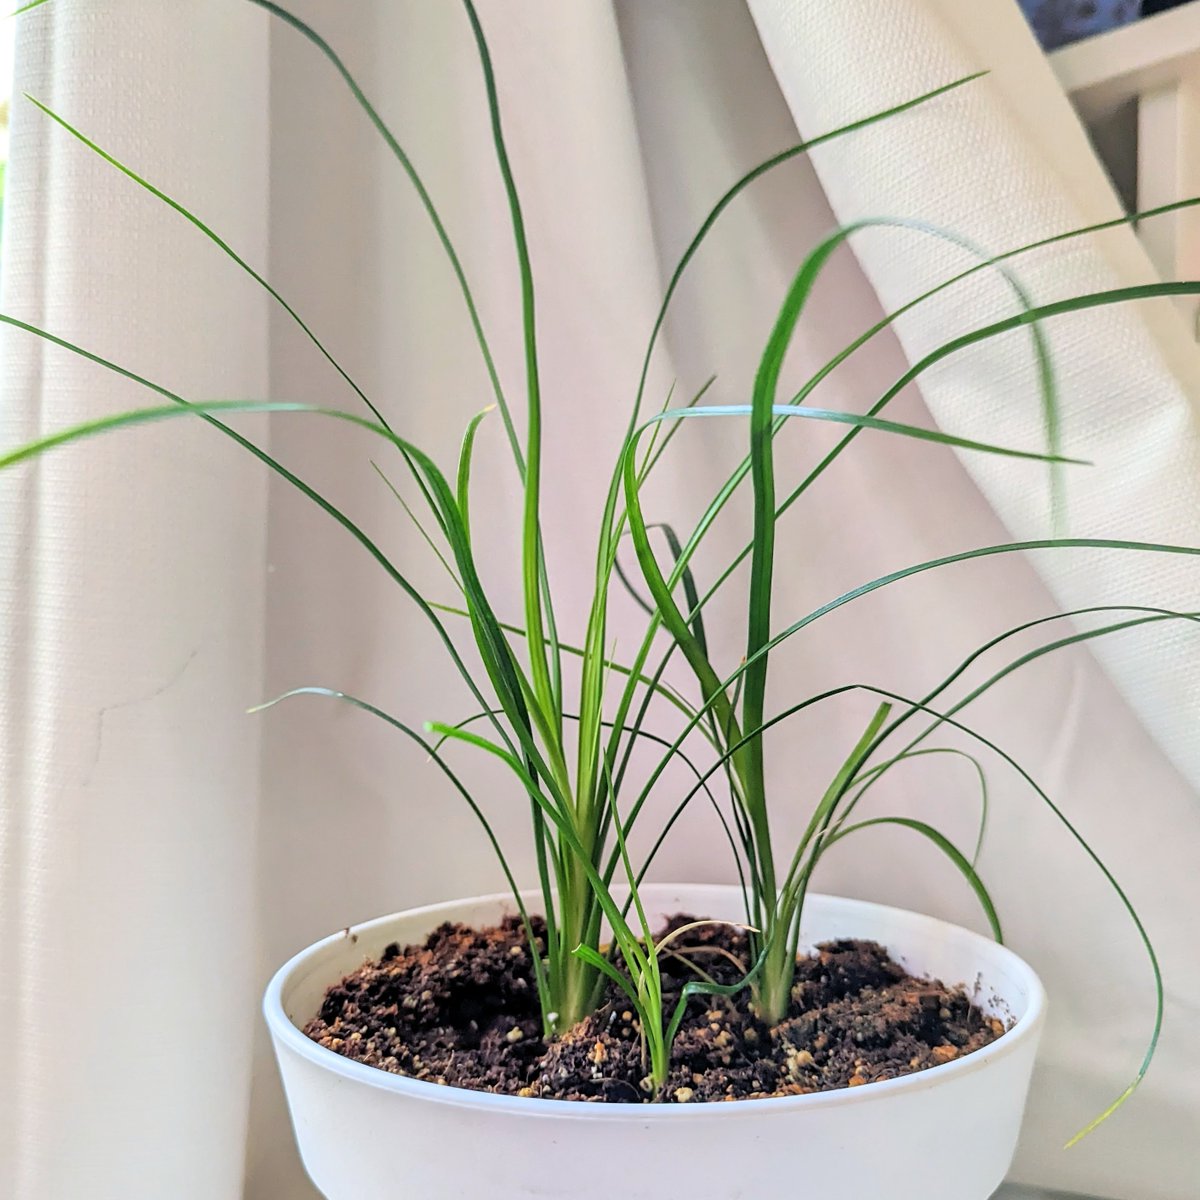 Little ponytail palm seedlings 💚 #ponytailpalm #beaucarnearecurvata #succulentseeds #plantbabies